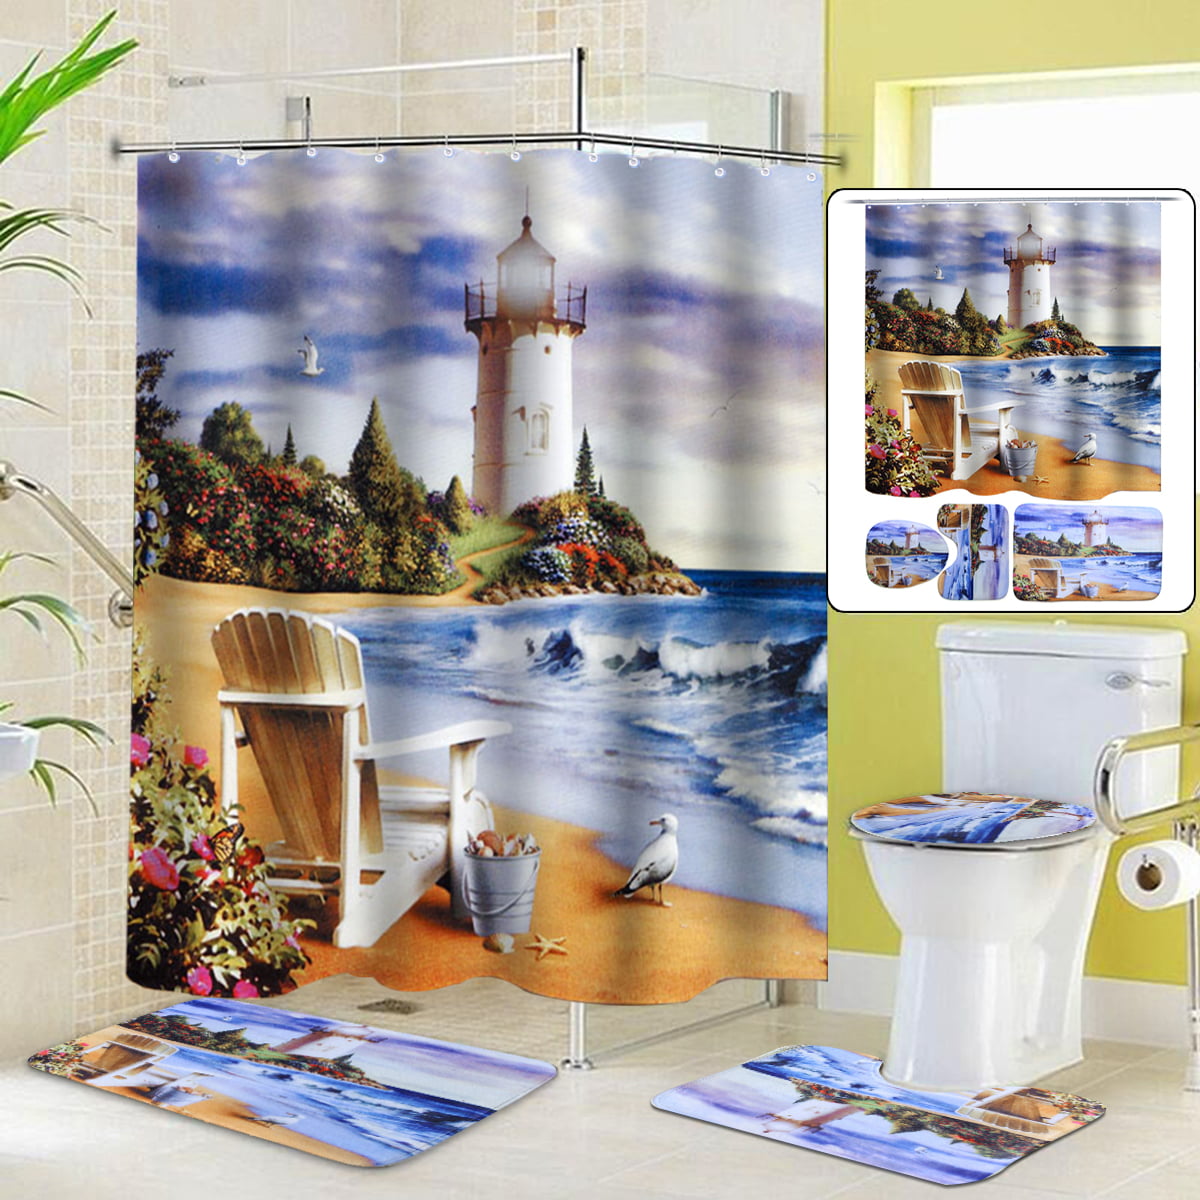 Soft Rug Bath Bathroom Bedroom Home Floor Shower Mat Nonslip Nautical Lighthouse 